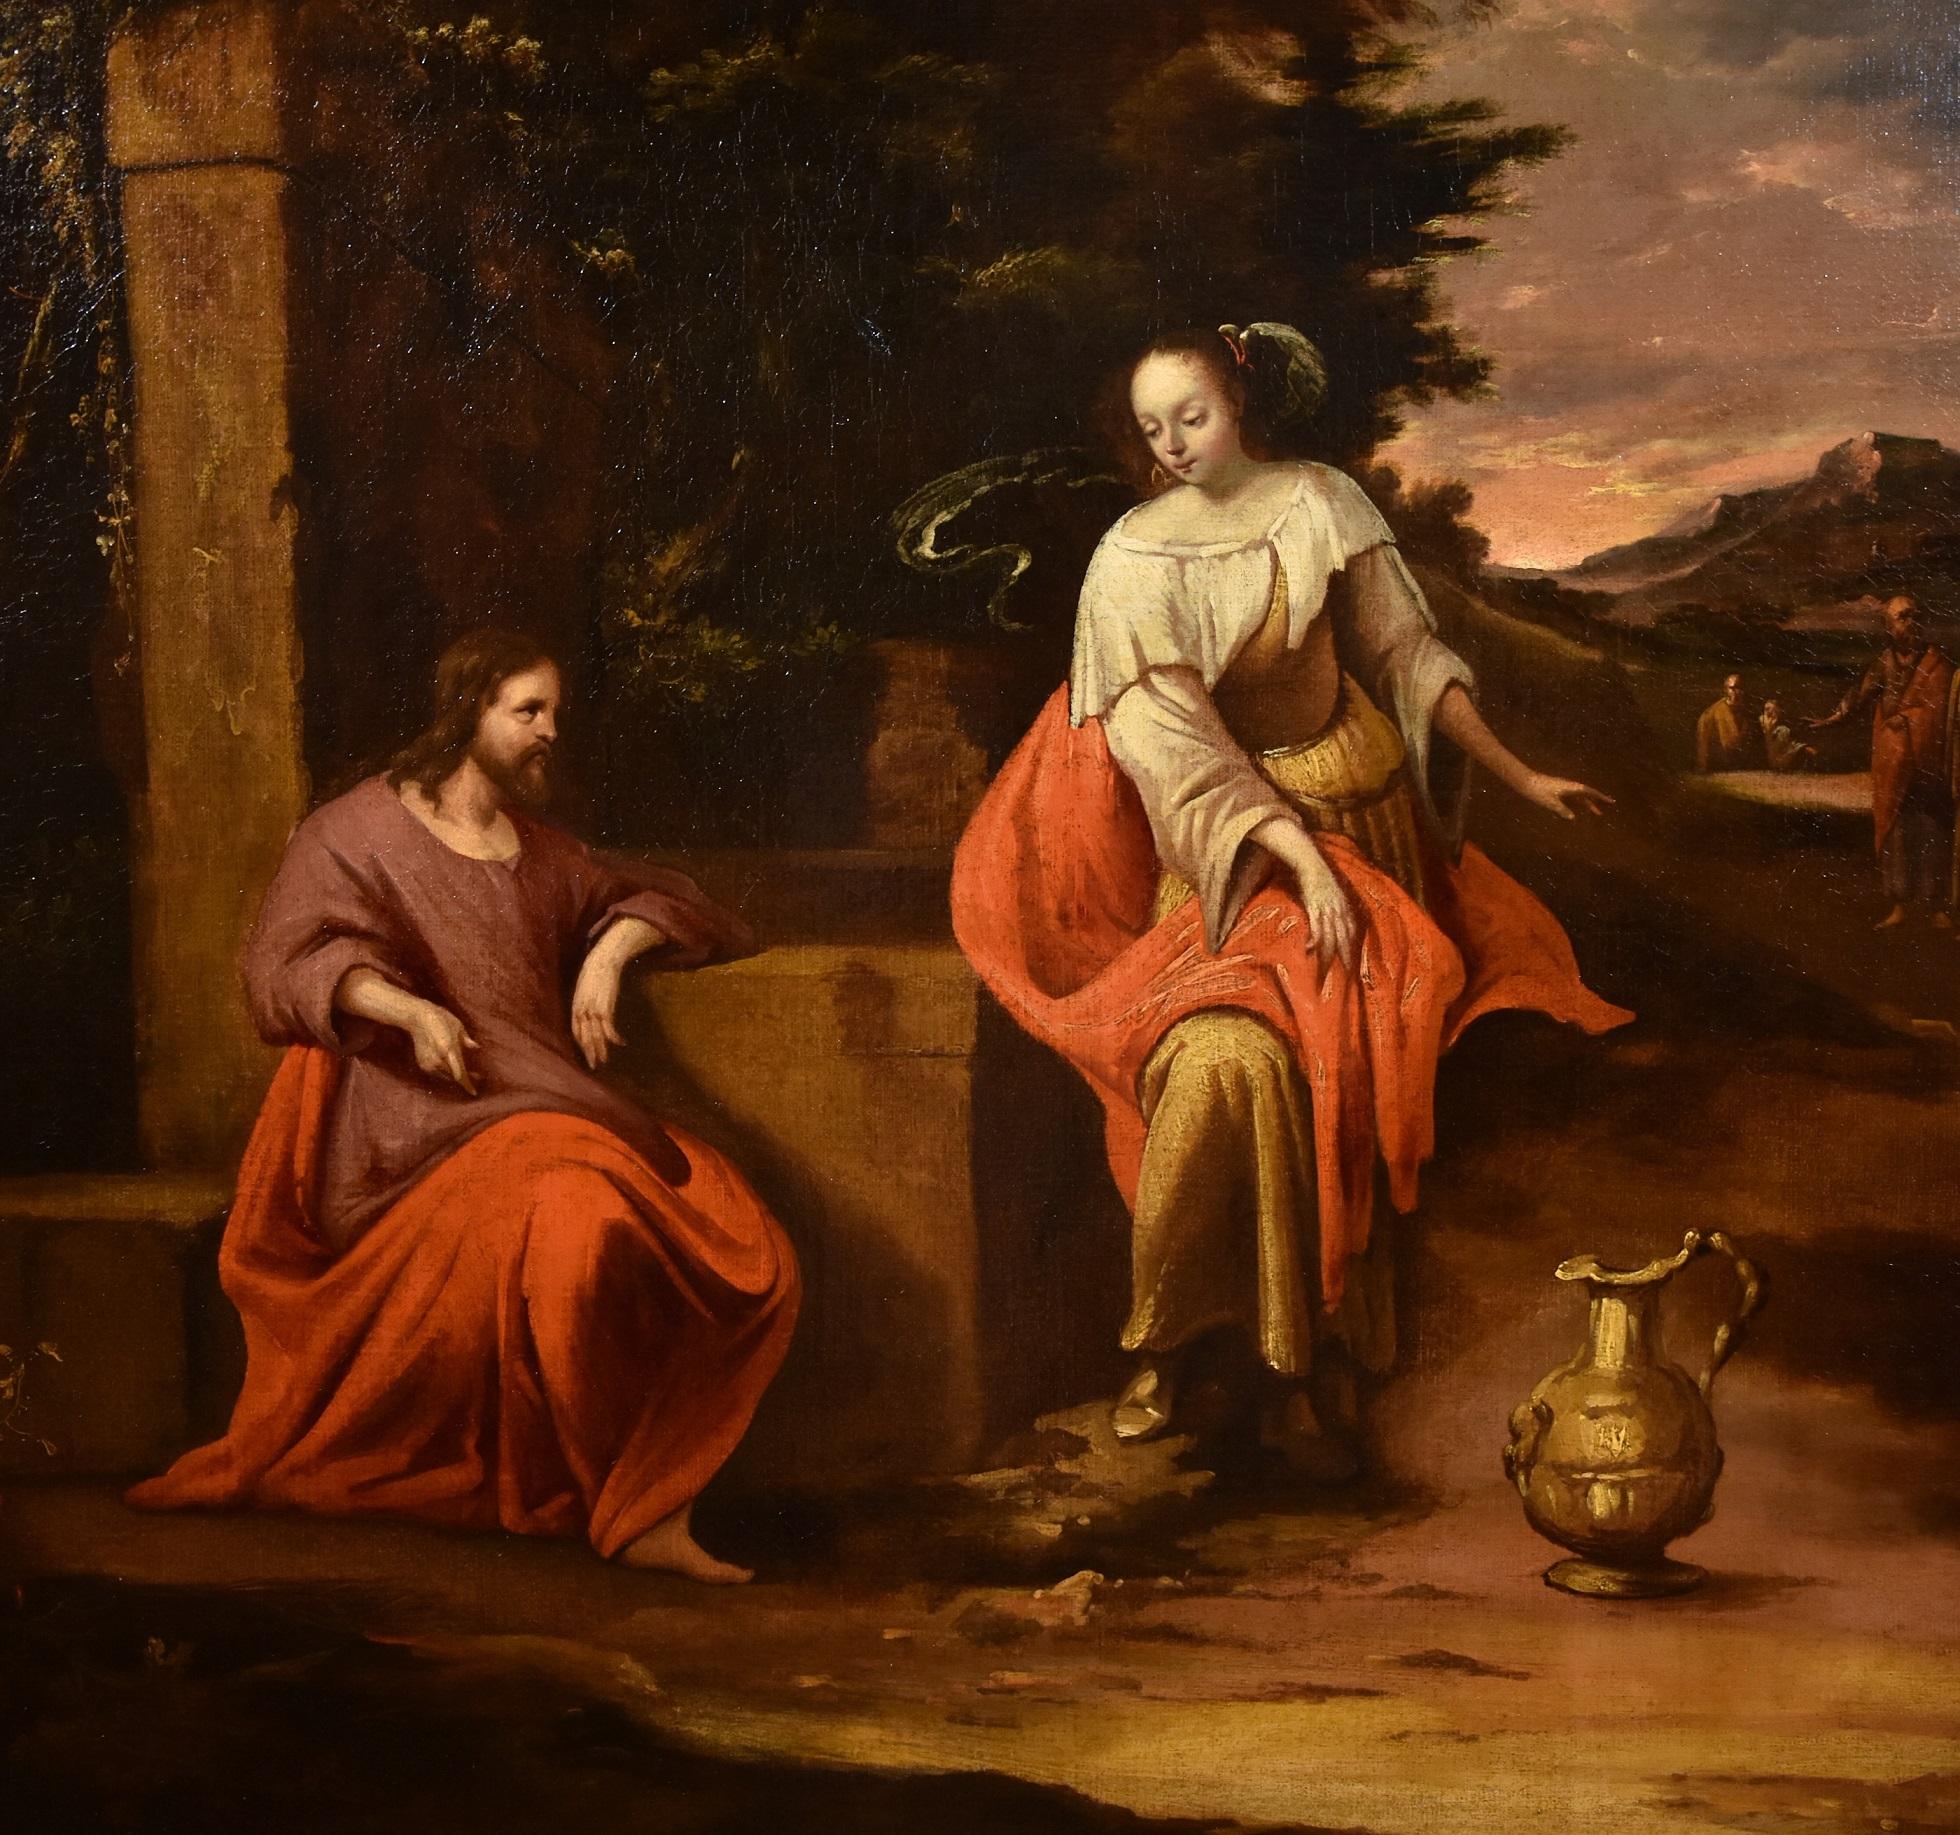 Christ Samaritan Paint Oil on canvas Oil on canvas Flemish Painter 17th Century 4